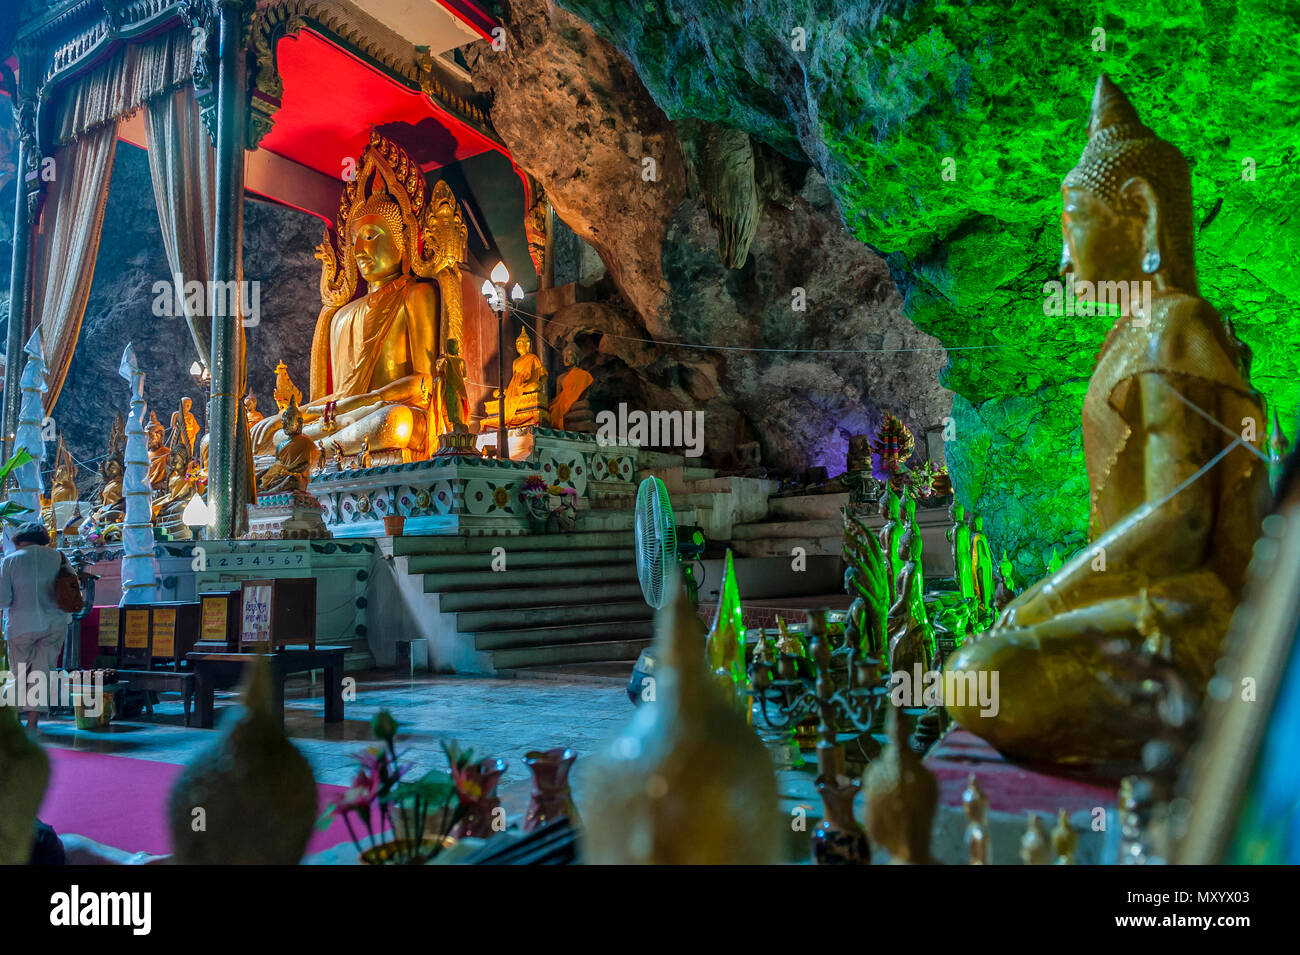 Wat Ban Tham cave temple. Khao Noi, Tha Muang District, Kanchanaburi 71110, Thailand Stock Photo